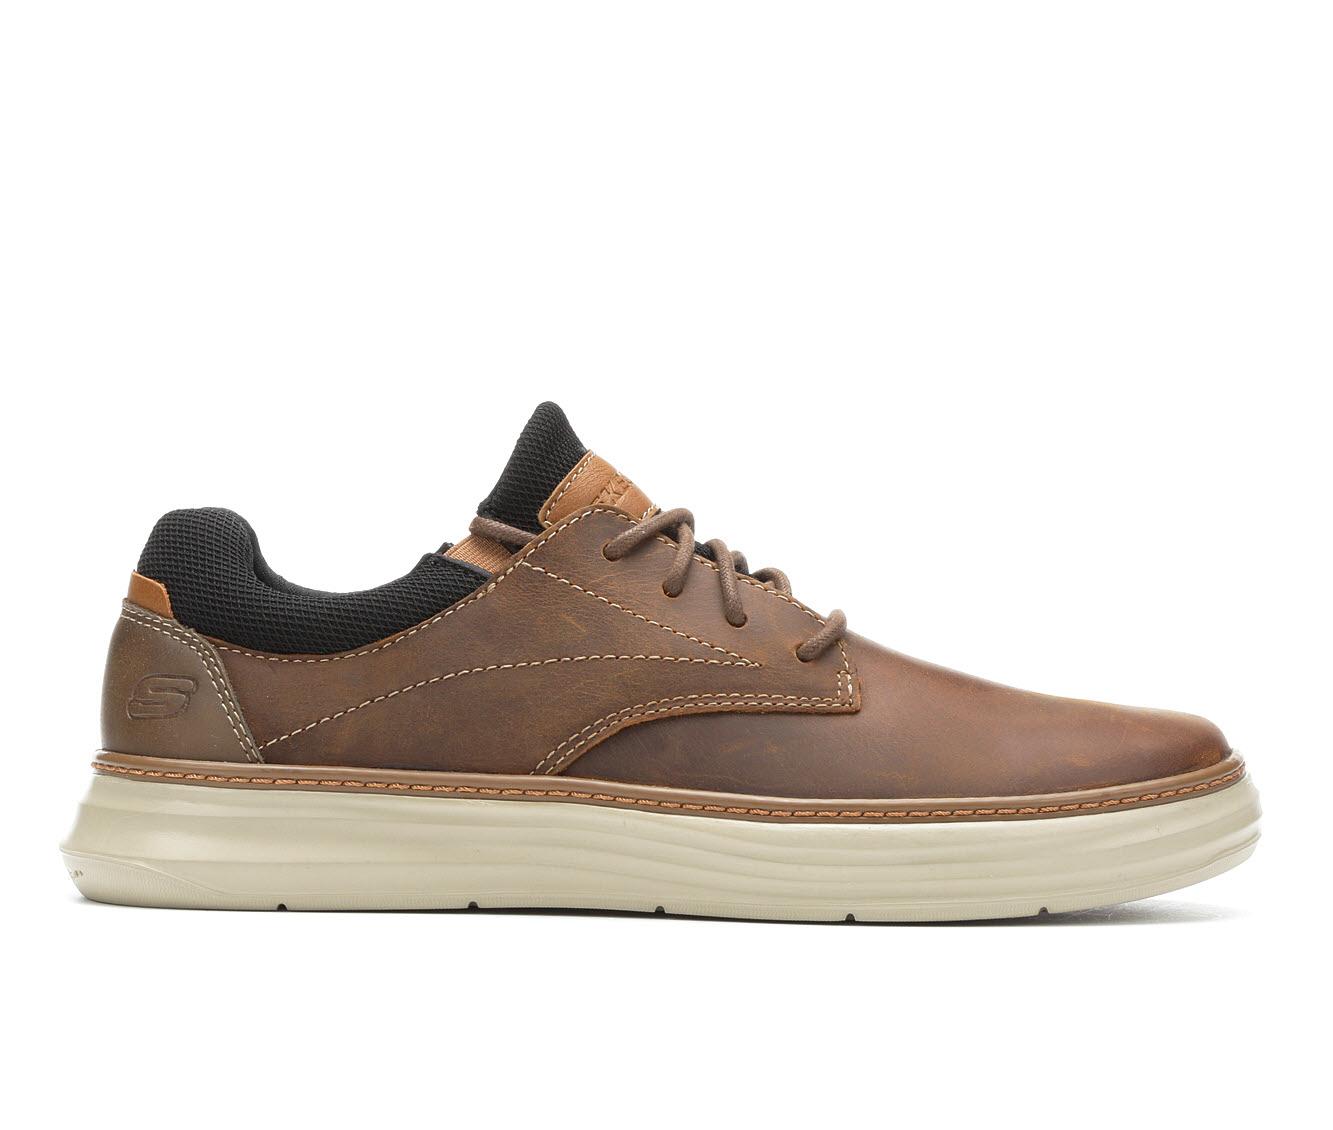 Skechers Rubber 66229 Soren Shoe in Brown Leather (Brown) for Men - Lyst